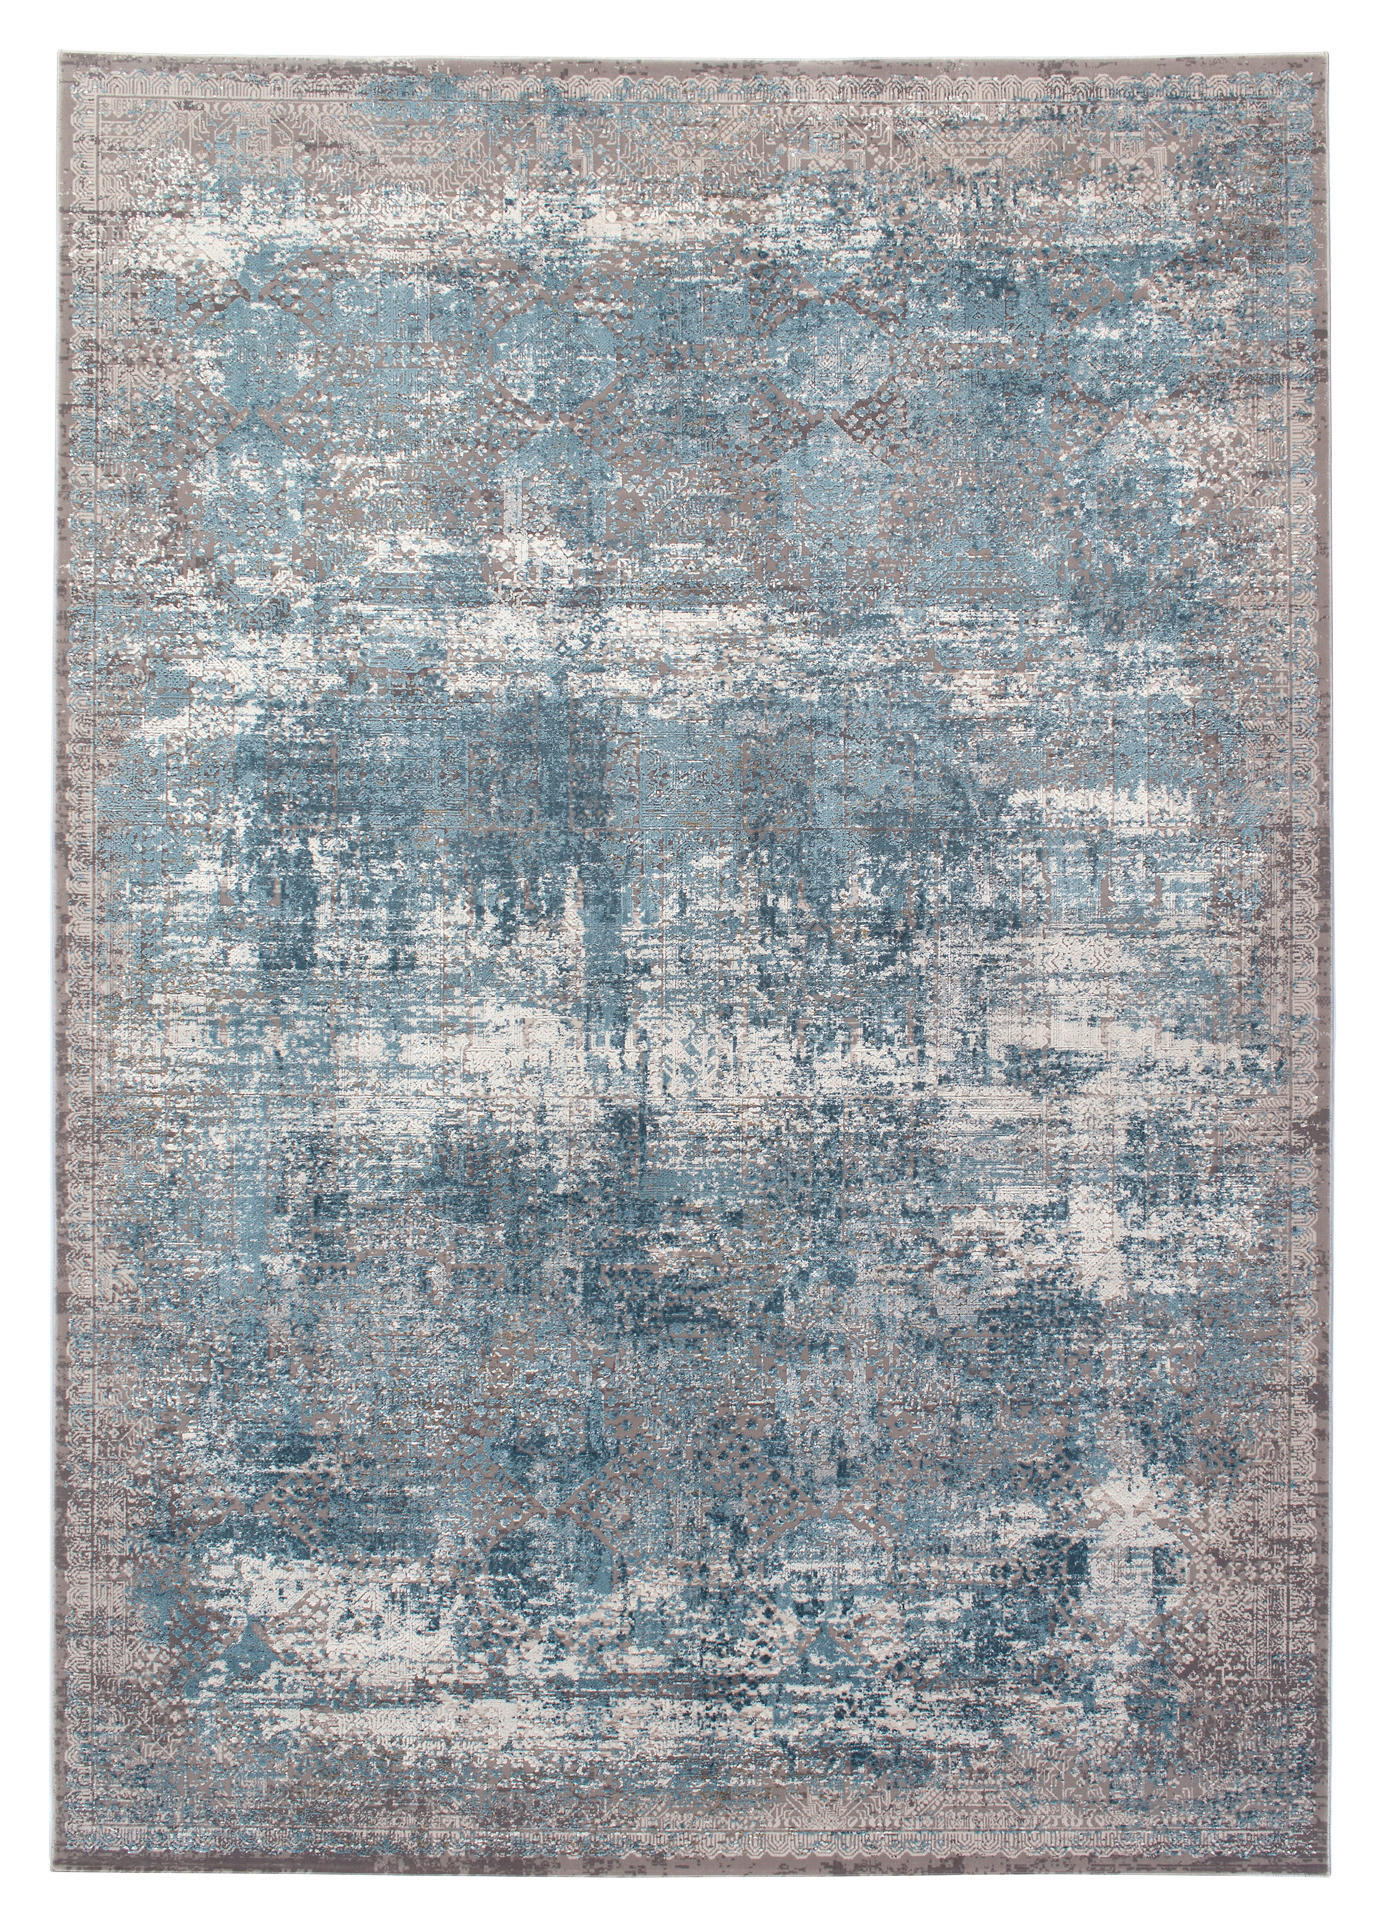 WEBTEPPICH  140/200 cm  Blau, Grau   - Blau/Grau, Design, Textil (140/200cm) - Musterring